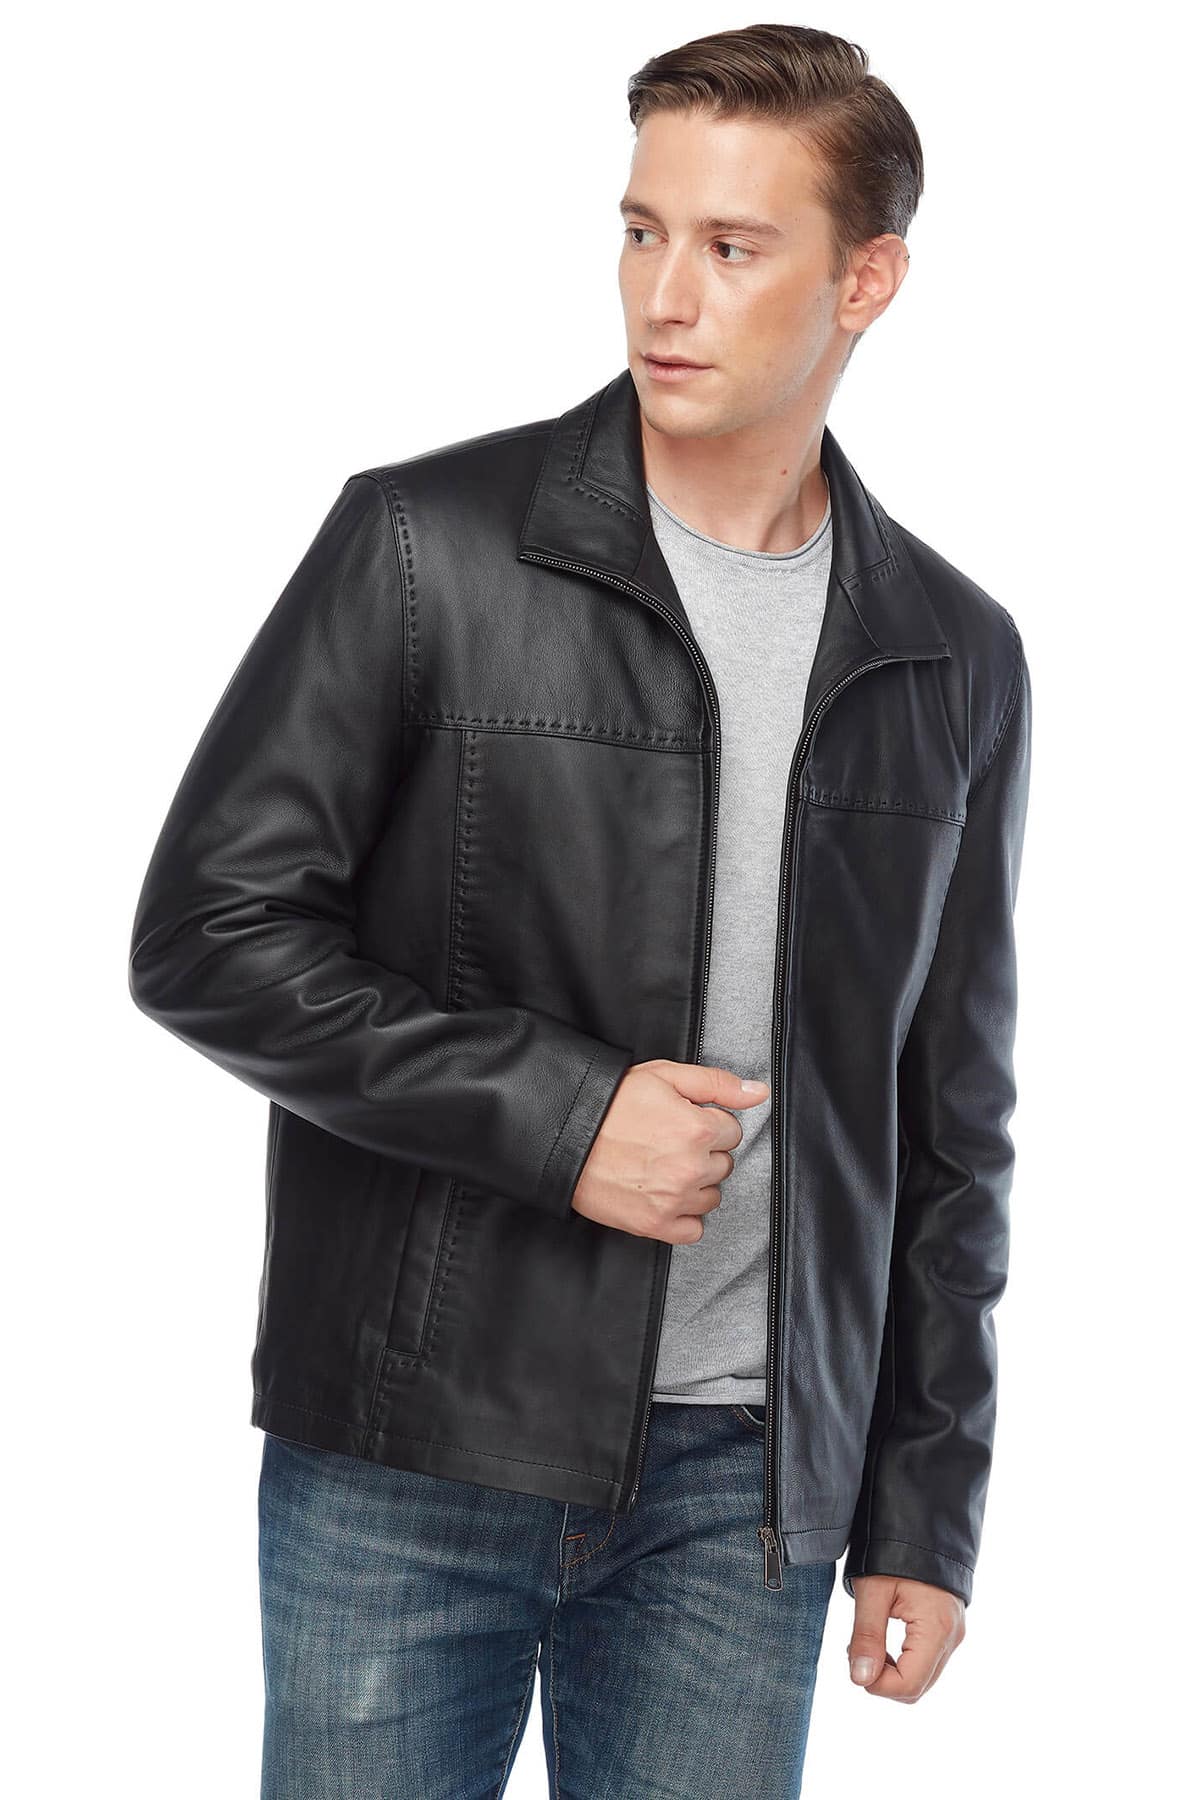 Trent Ford Men's 100 % Real Black Leather Jacket